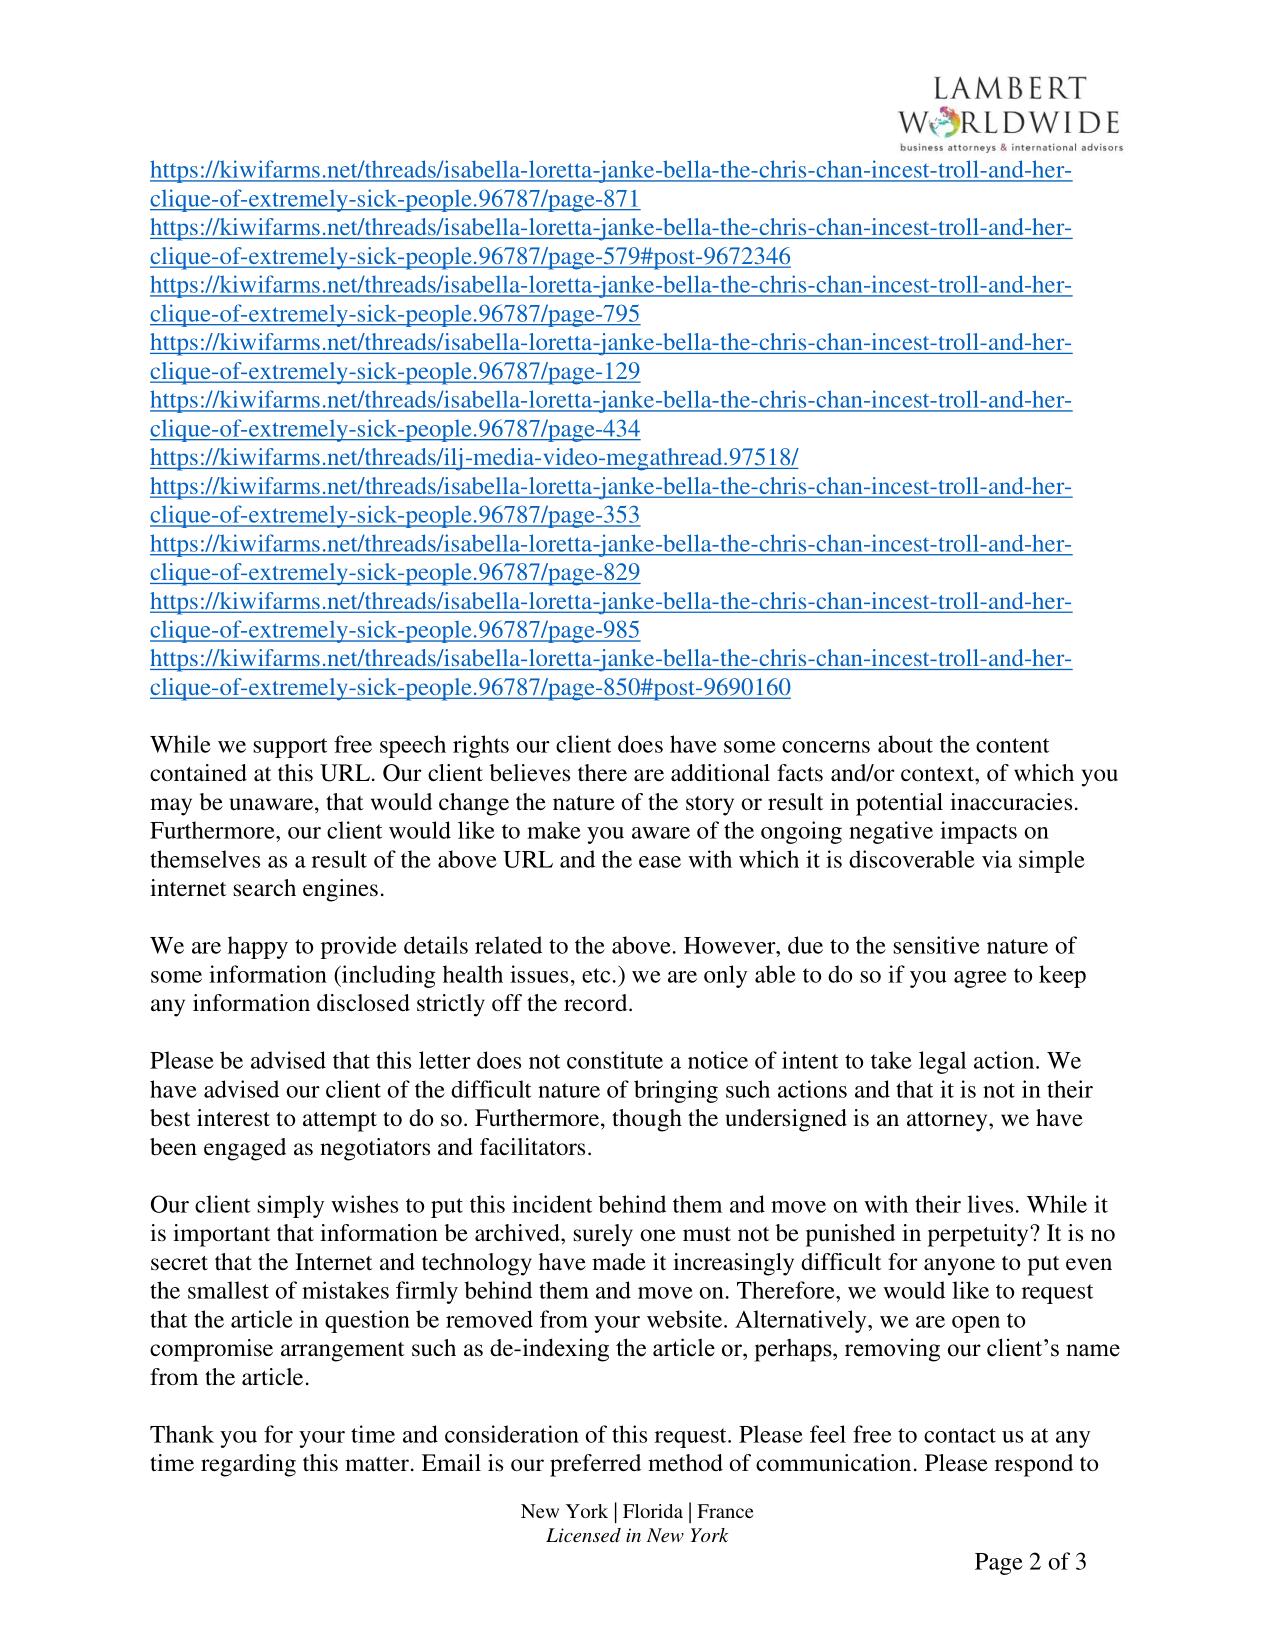 Letter to Kiwi Farms - Janke-2.jpg